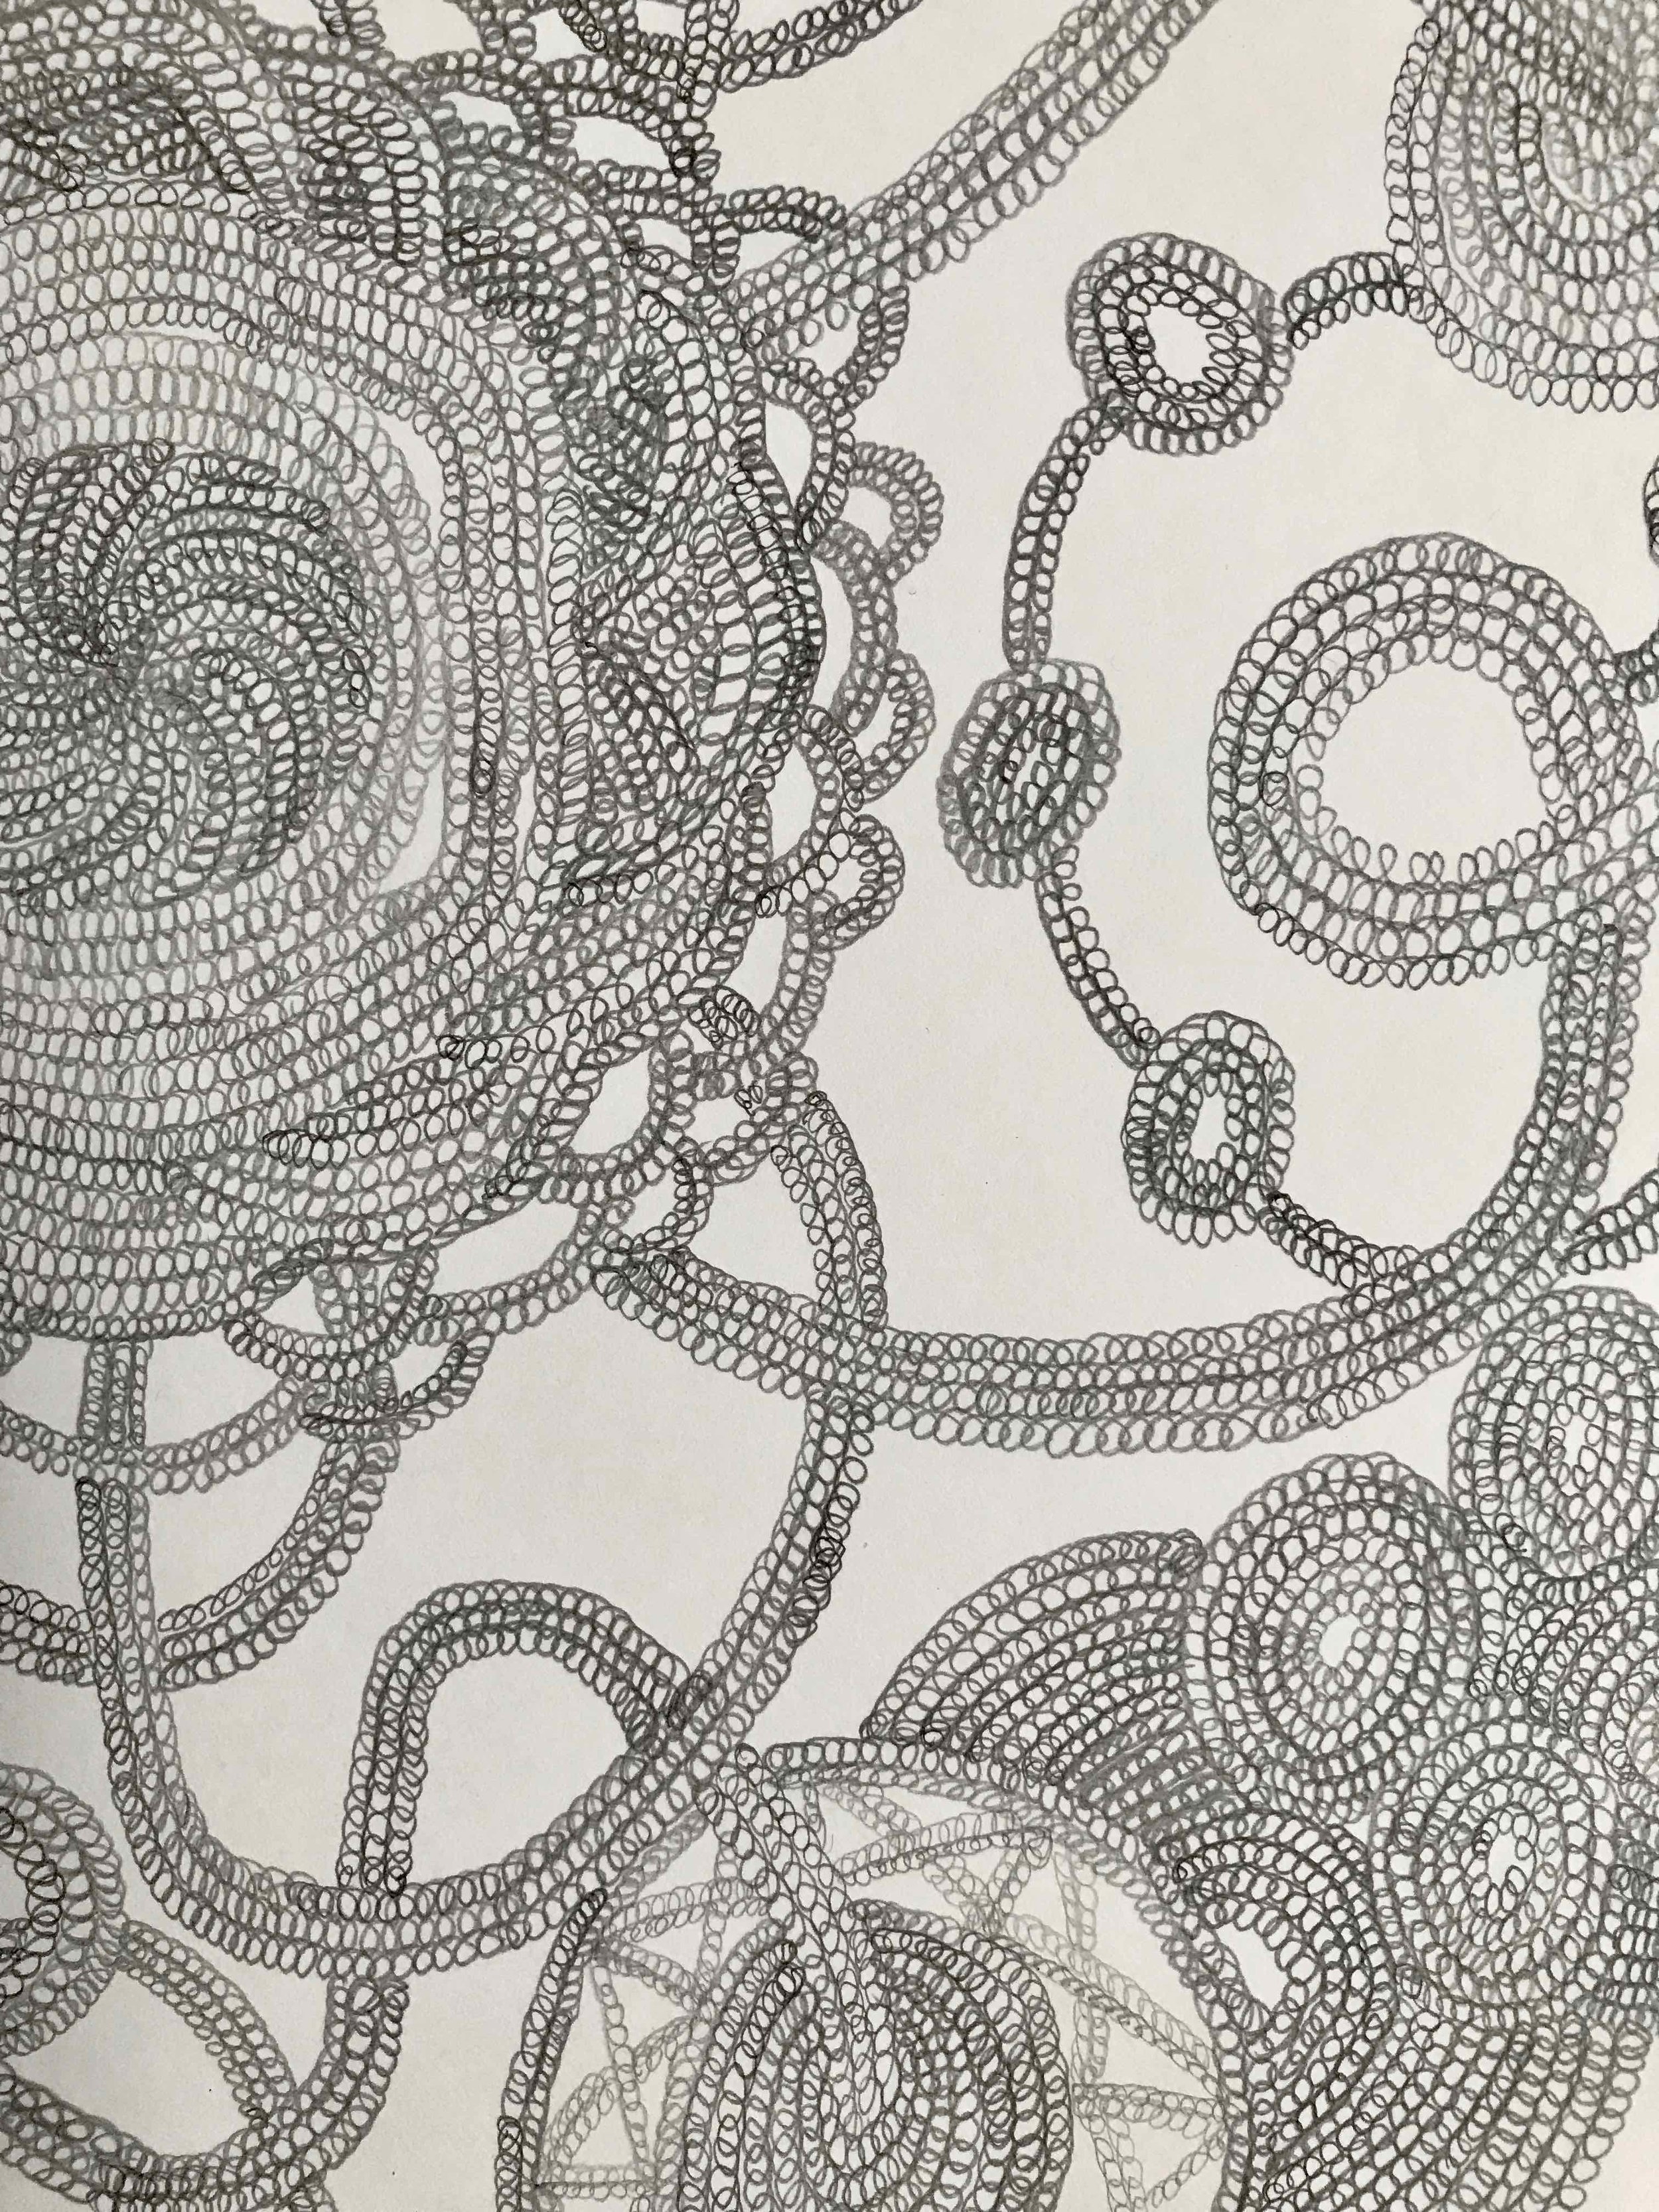   Turtegning, detalj  42x29,7cm blyant på papir 2015 